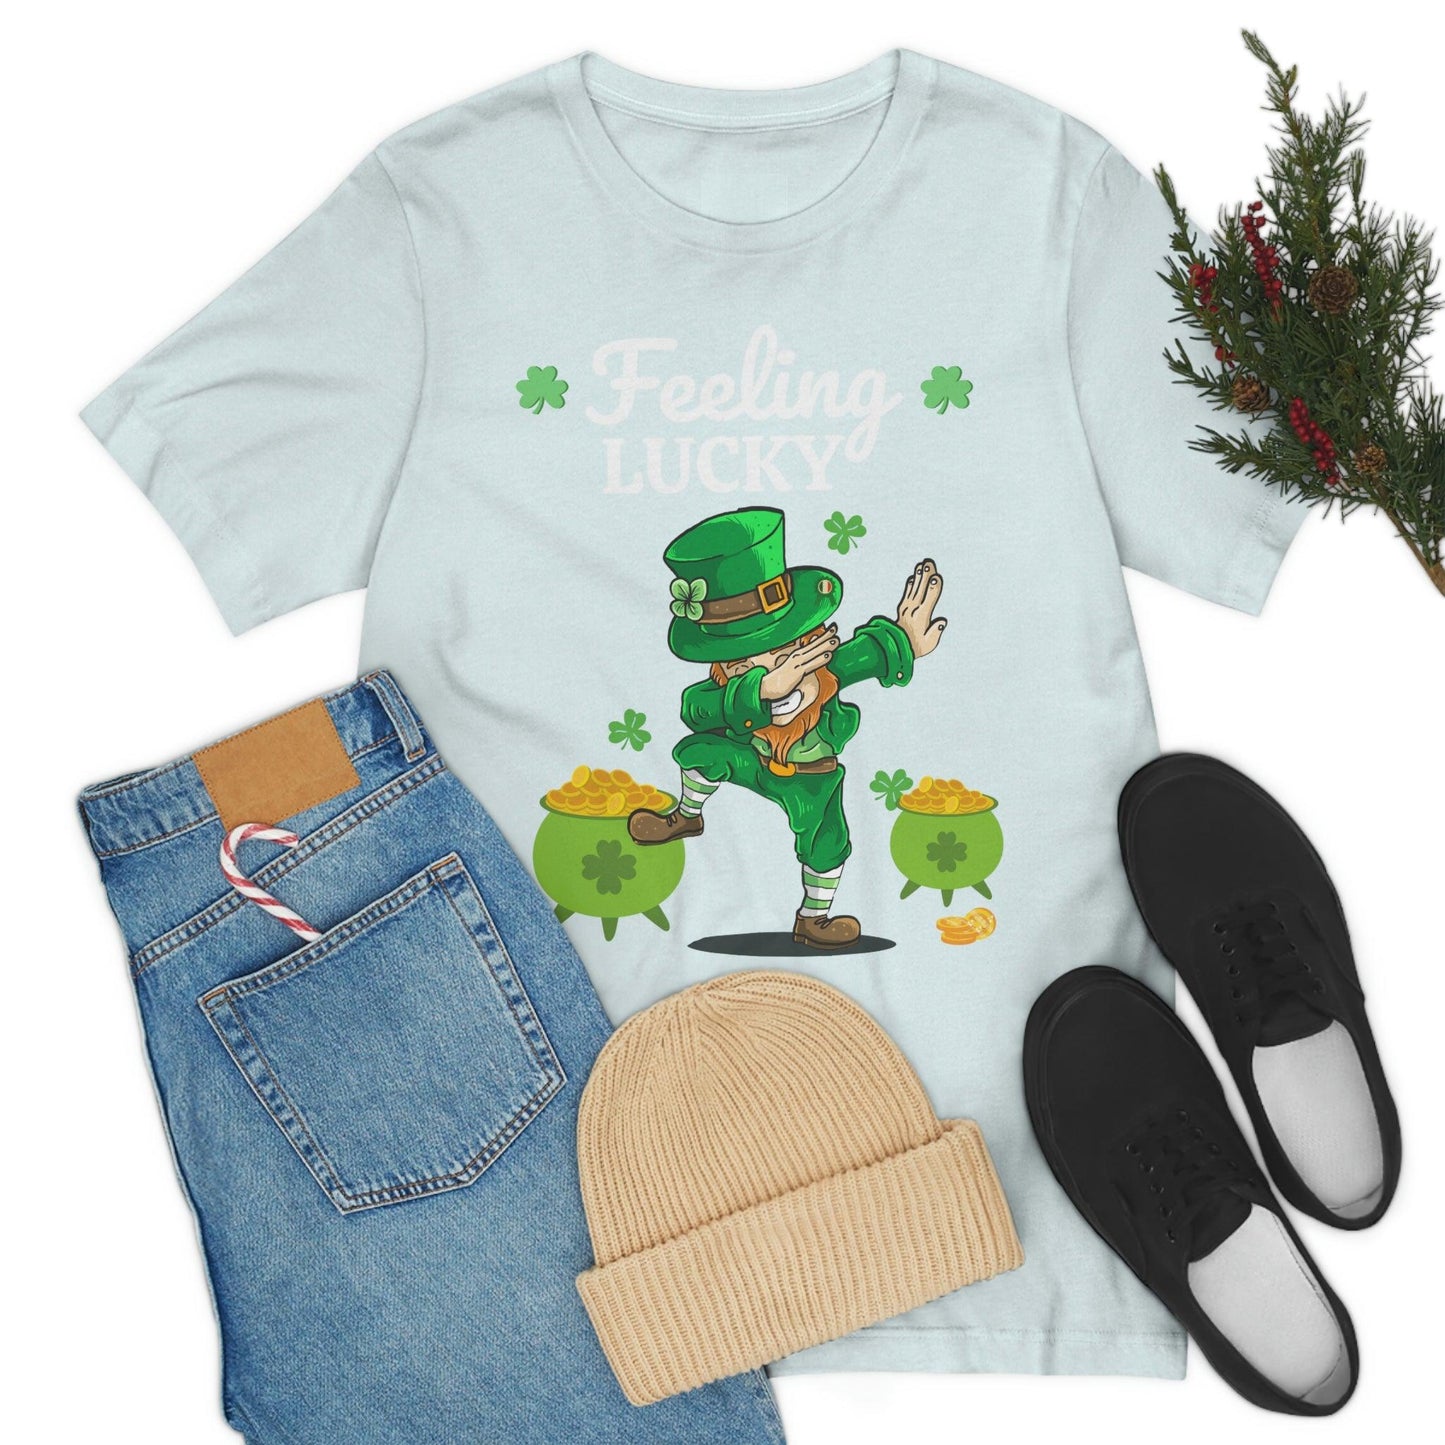 Feeling Lucky St Patrick's Day shirt - Shamrock shirt - shenanigans shirt St Paddys day Shirt - St Patricks day gift